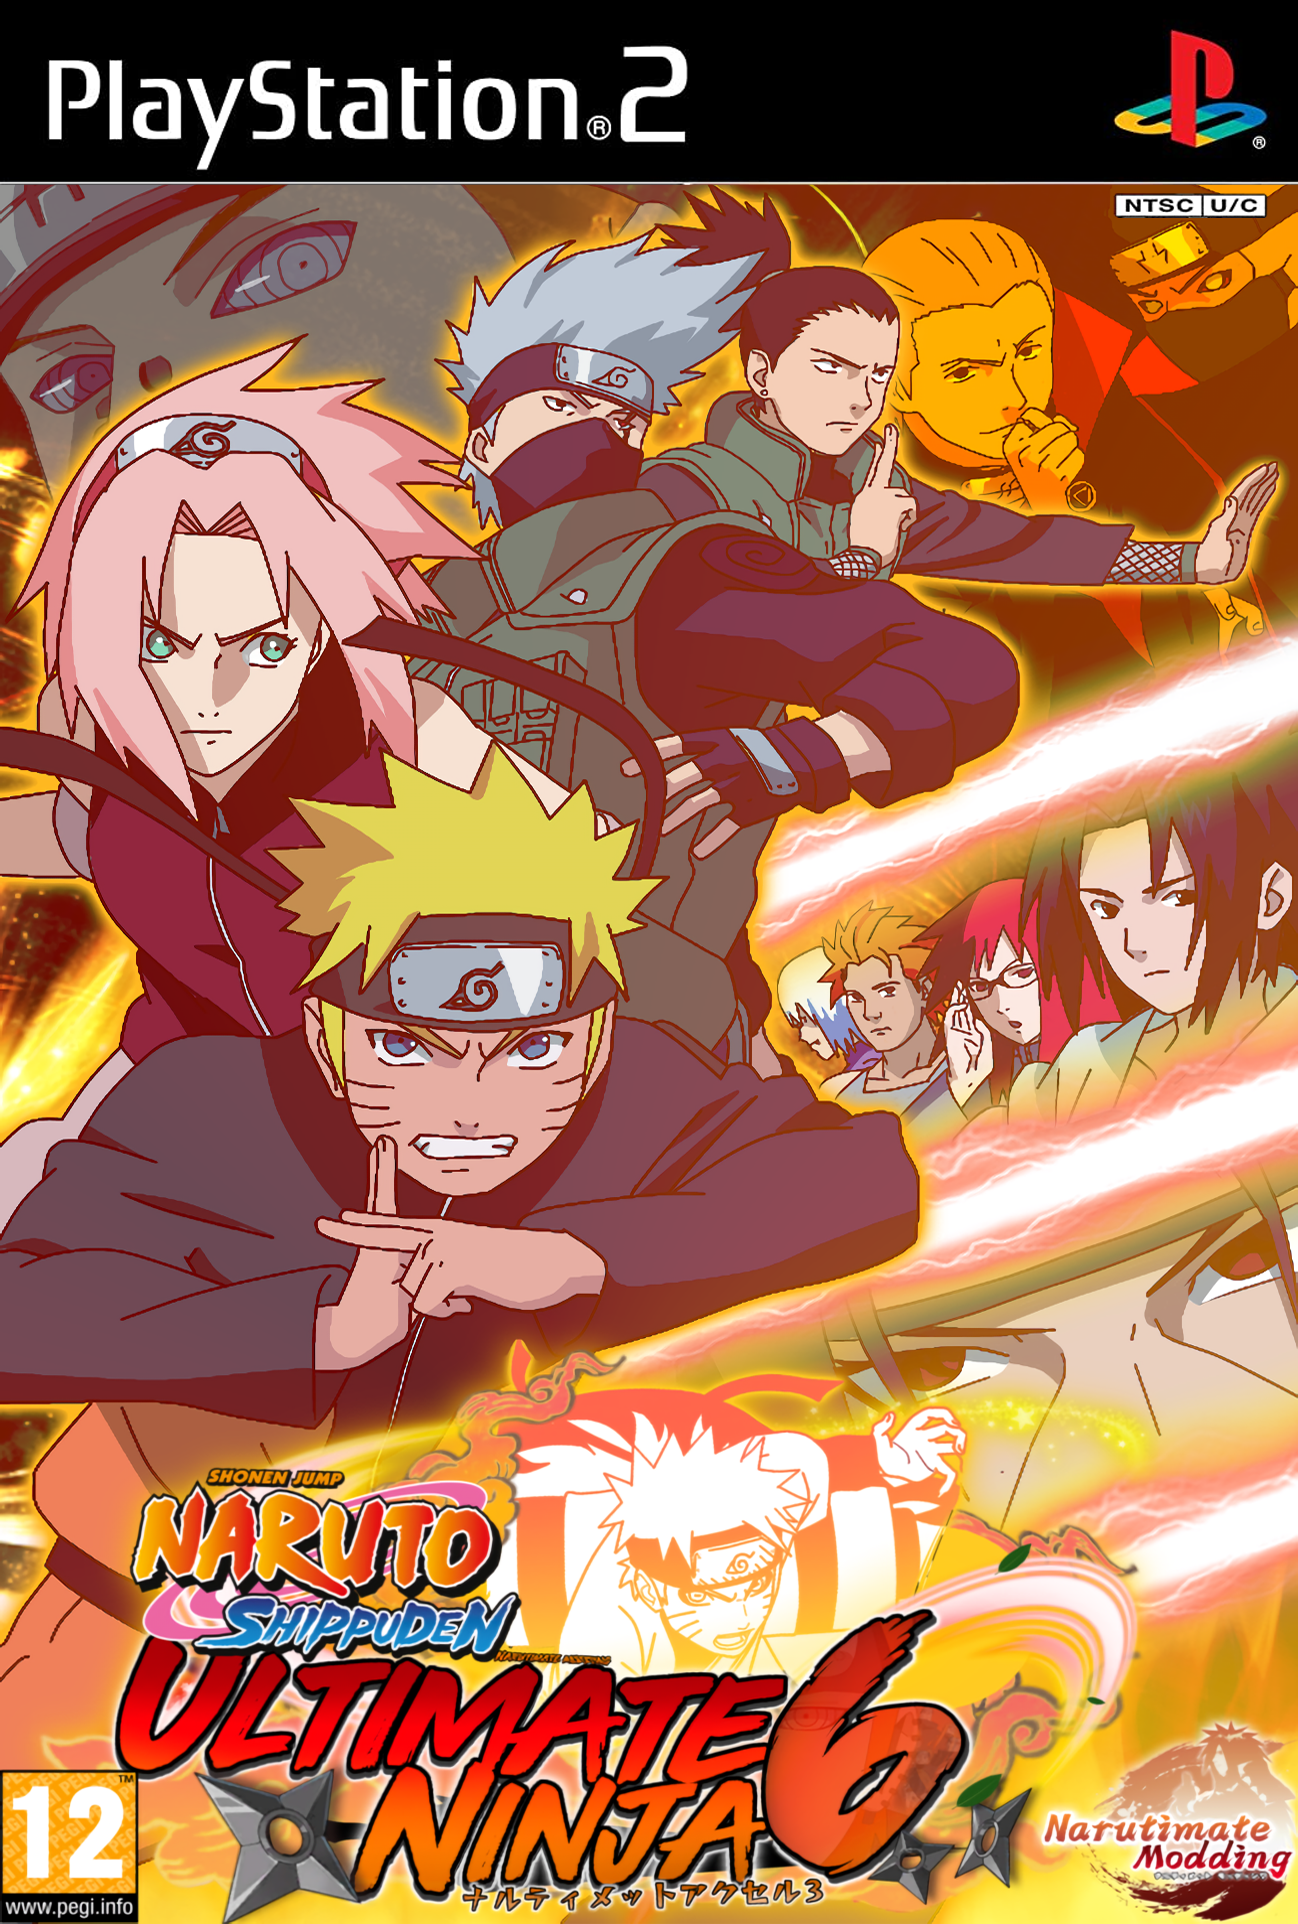 Naruto Shippuden Ultimate Ninja (5 todos os personagens)-ps2 